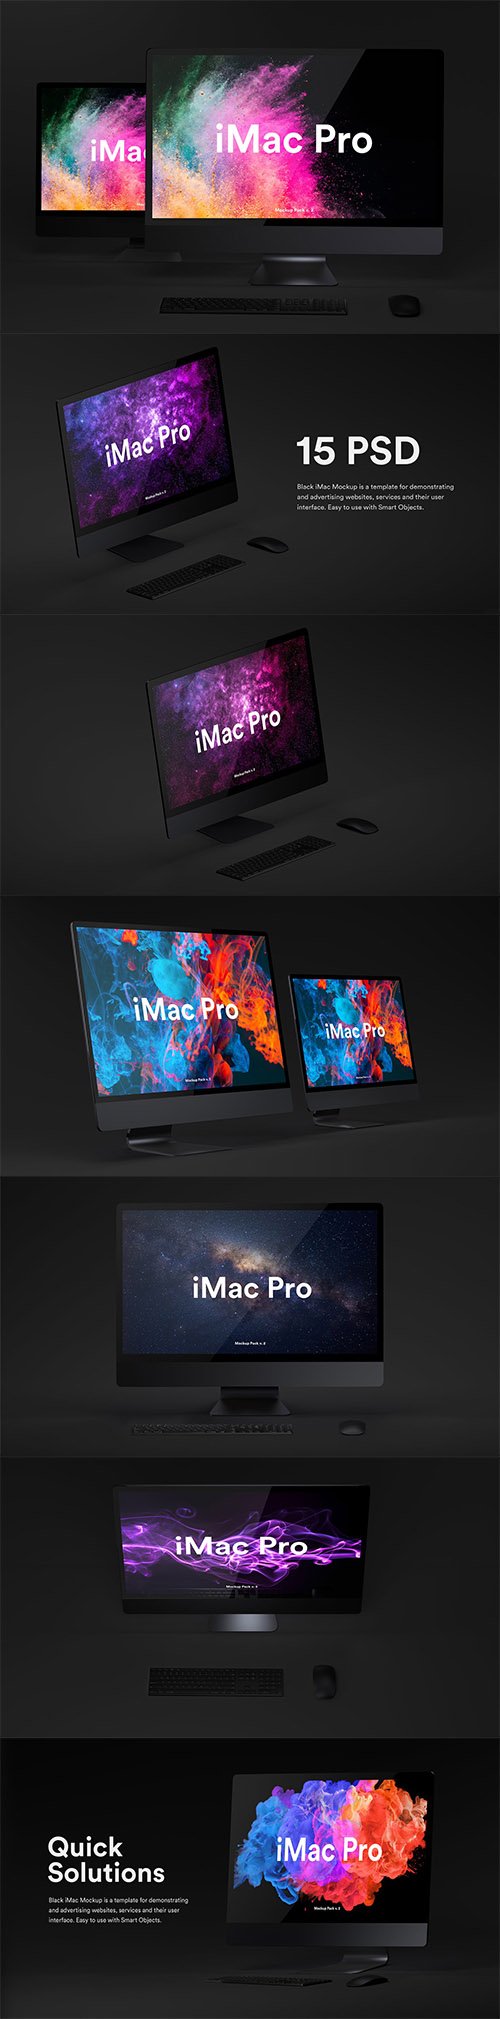 Dark iMac Pro Mockup PSD